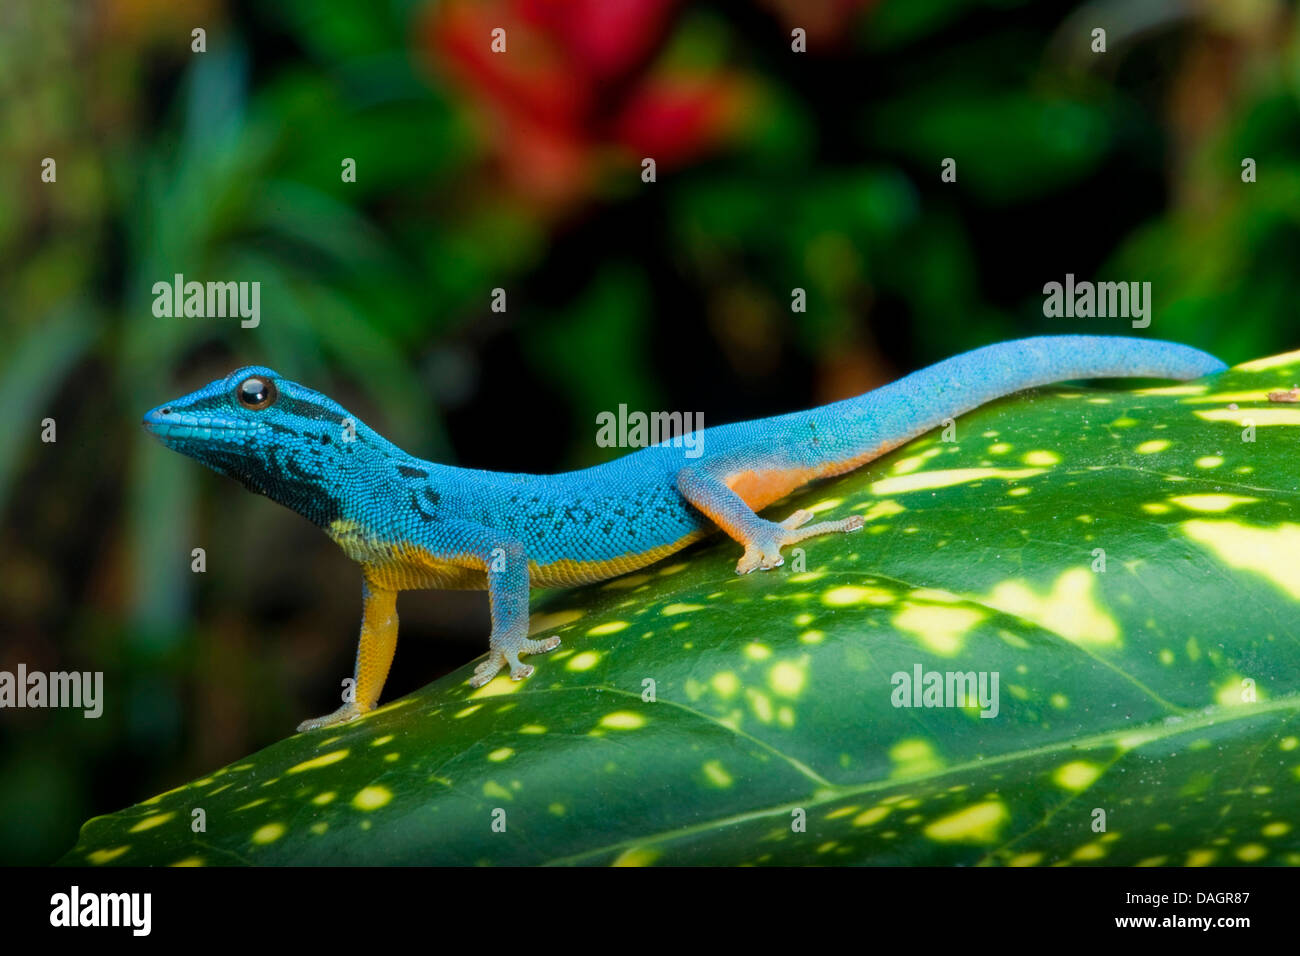 Geco enano Williams, azul eléctrico Gecko (Lygodactylus williamsi), macho Foto de stock